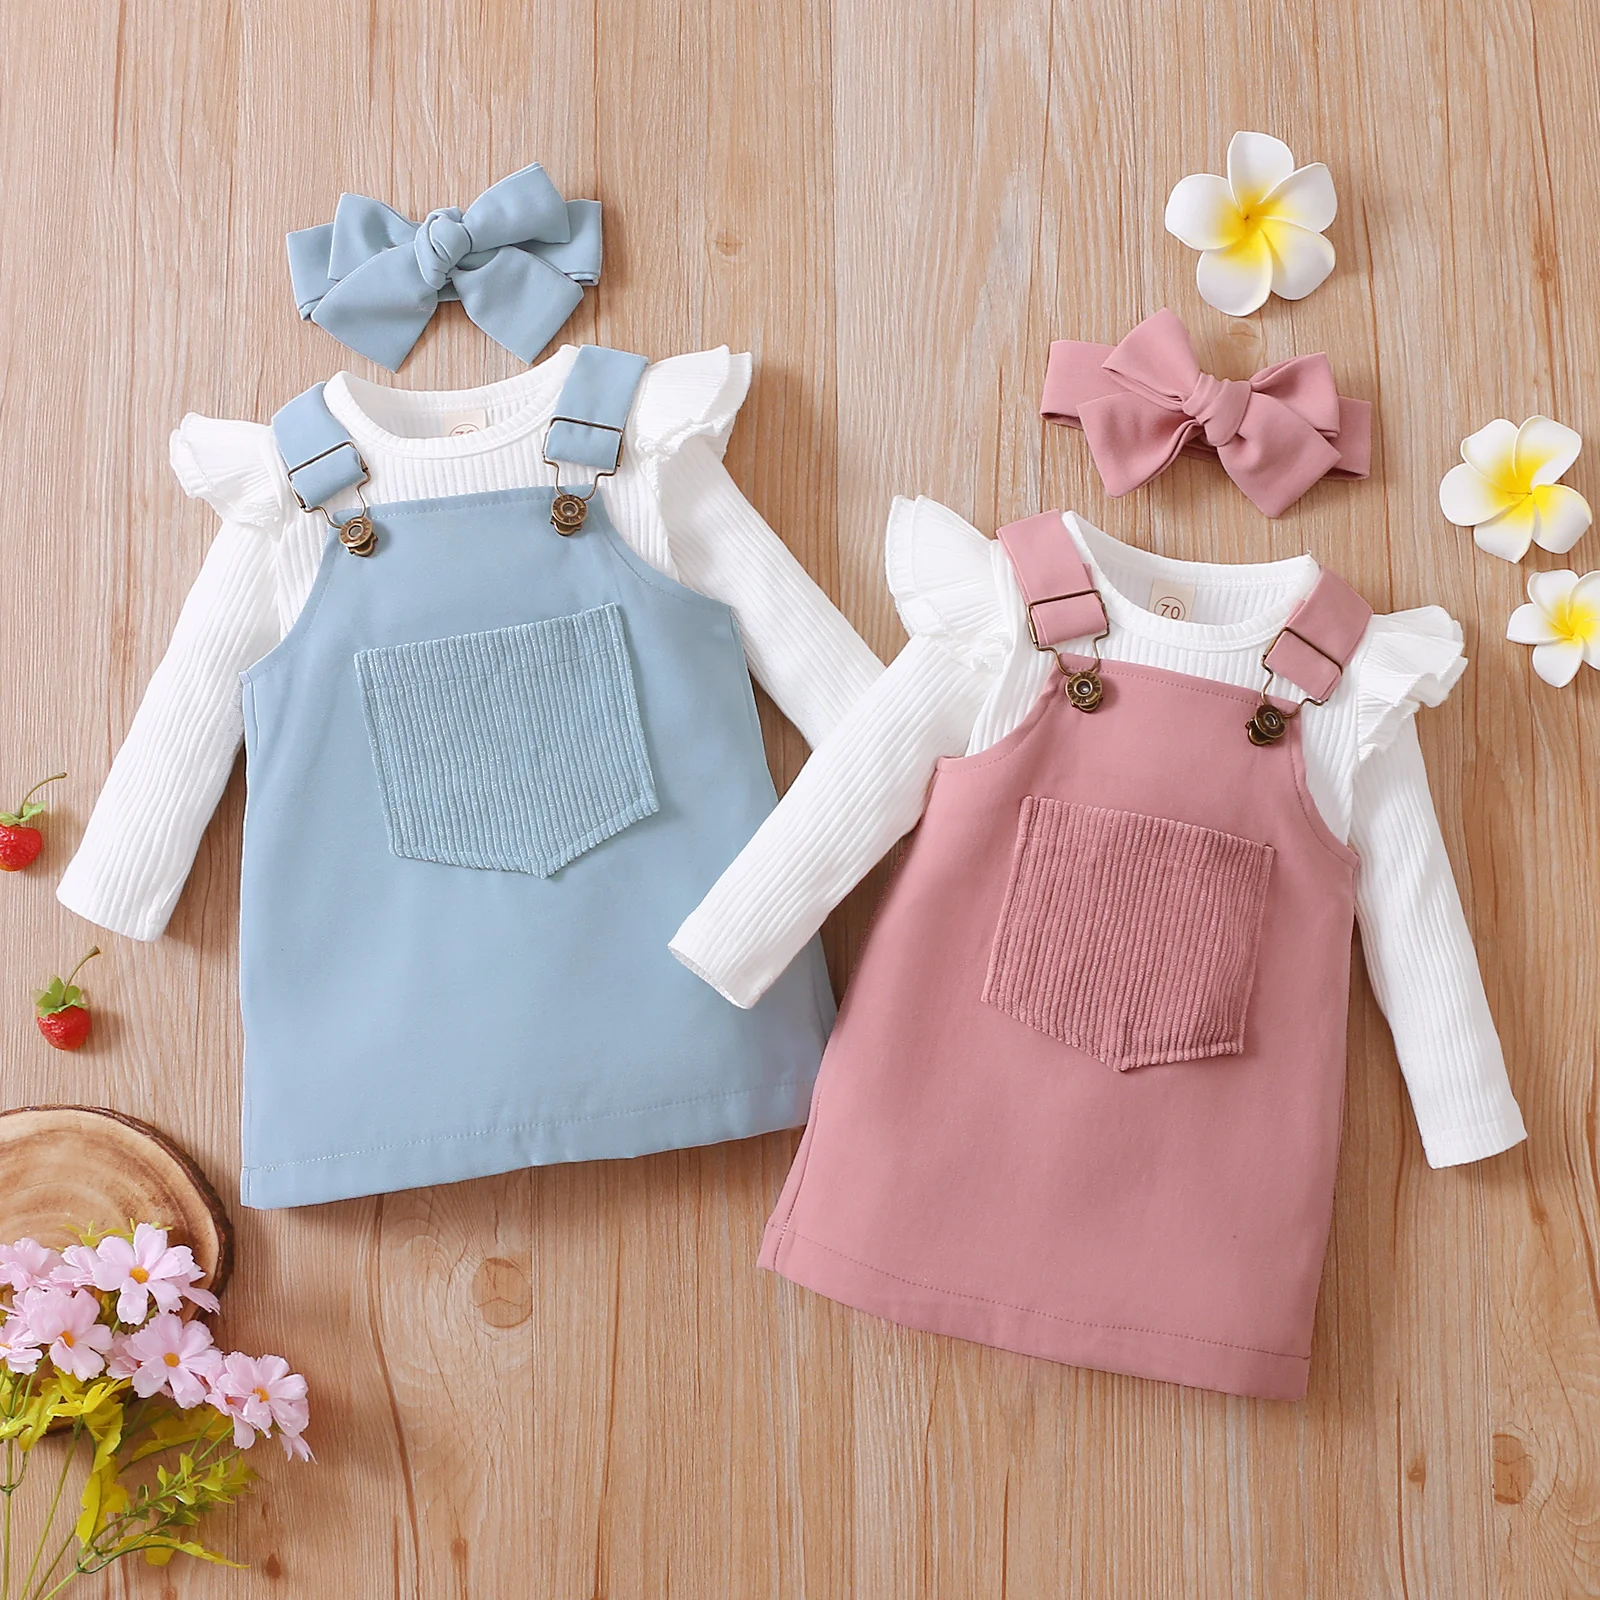 Newborn Baby Clothes Set 